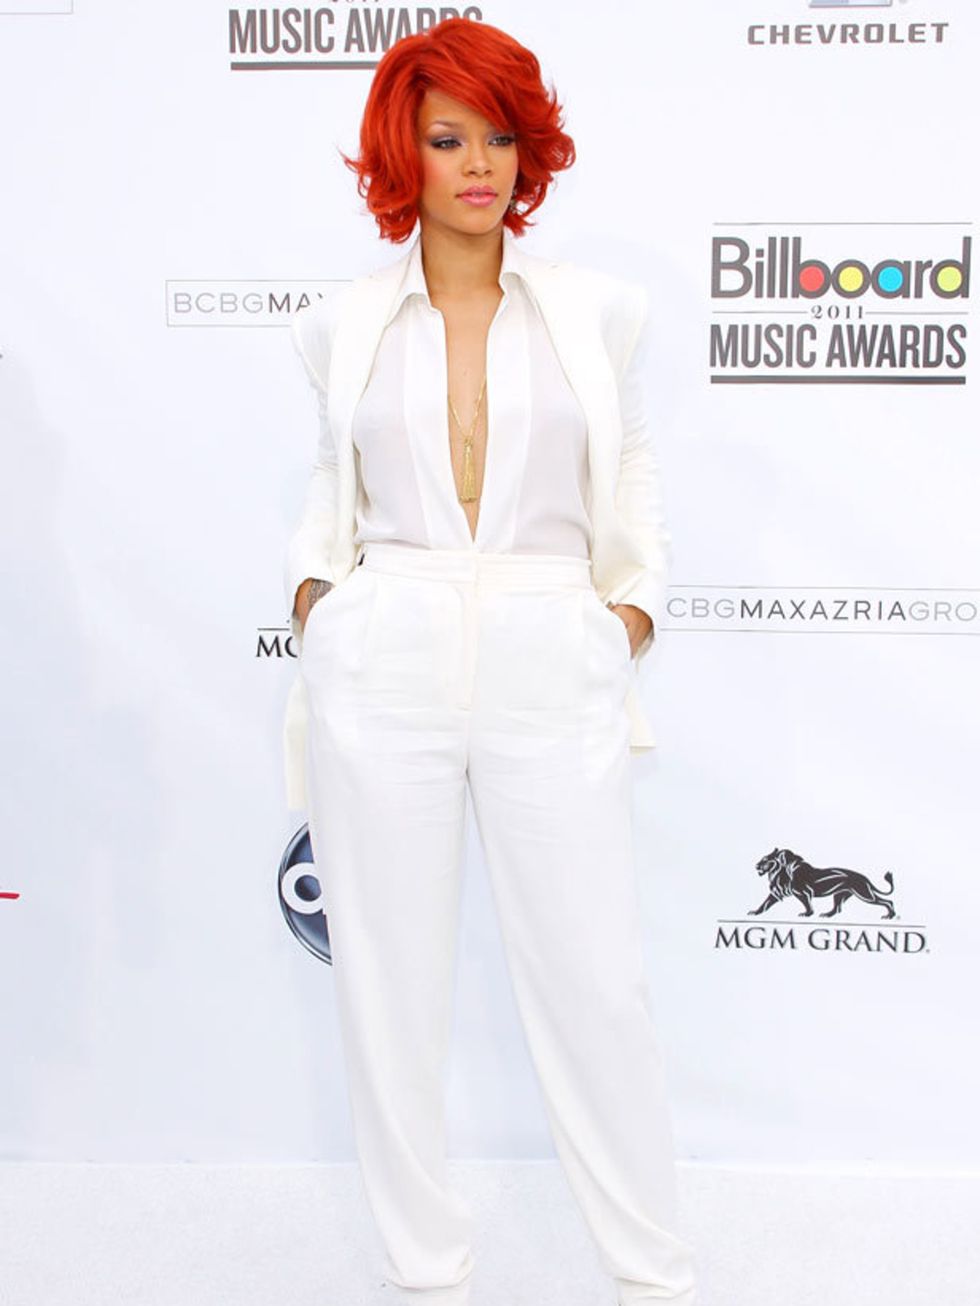 <p><a href="http://www.elleuk.com/starstyle/style-files/(section)/rihanna">Rihanna</a> wearing a crisp white <a href="http://www.elleuk.com/catwalk/collections/max-azria/">Max Azria</a> suit to the <a href="http://www.elleuk.com/news/fashion-news/beyonce-